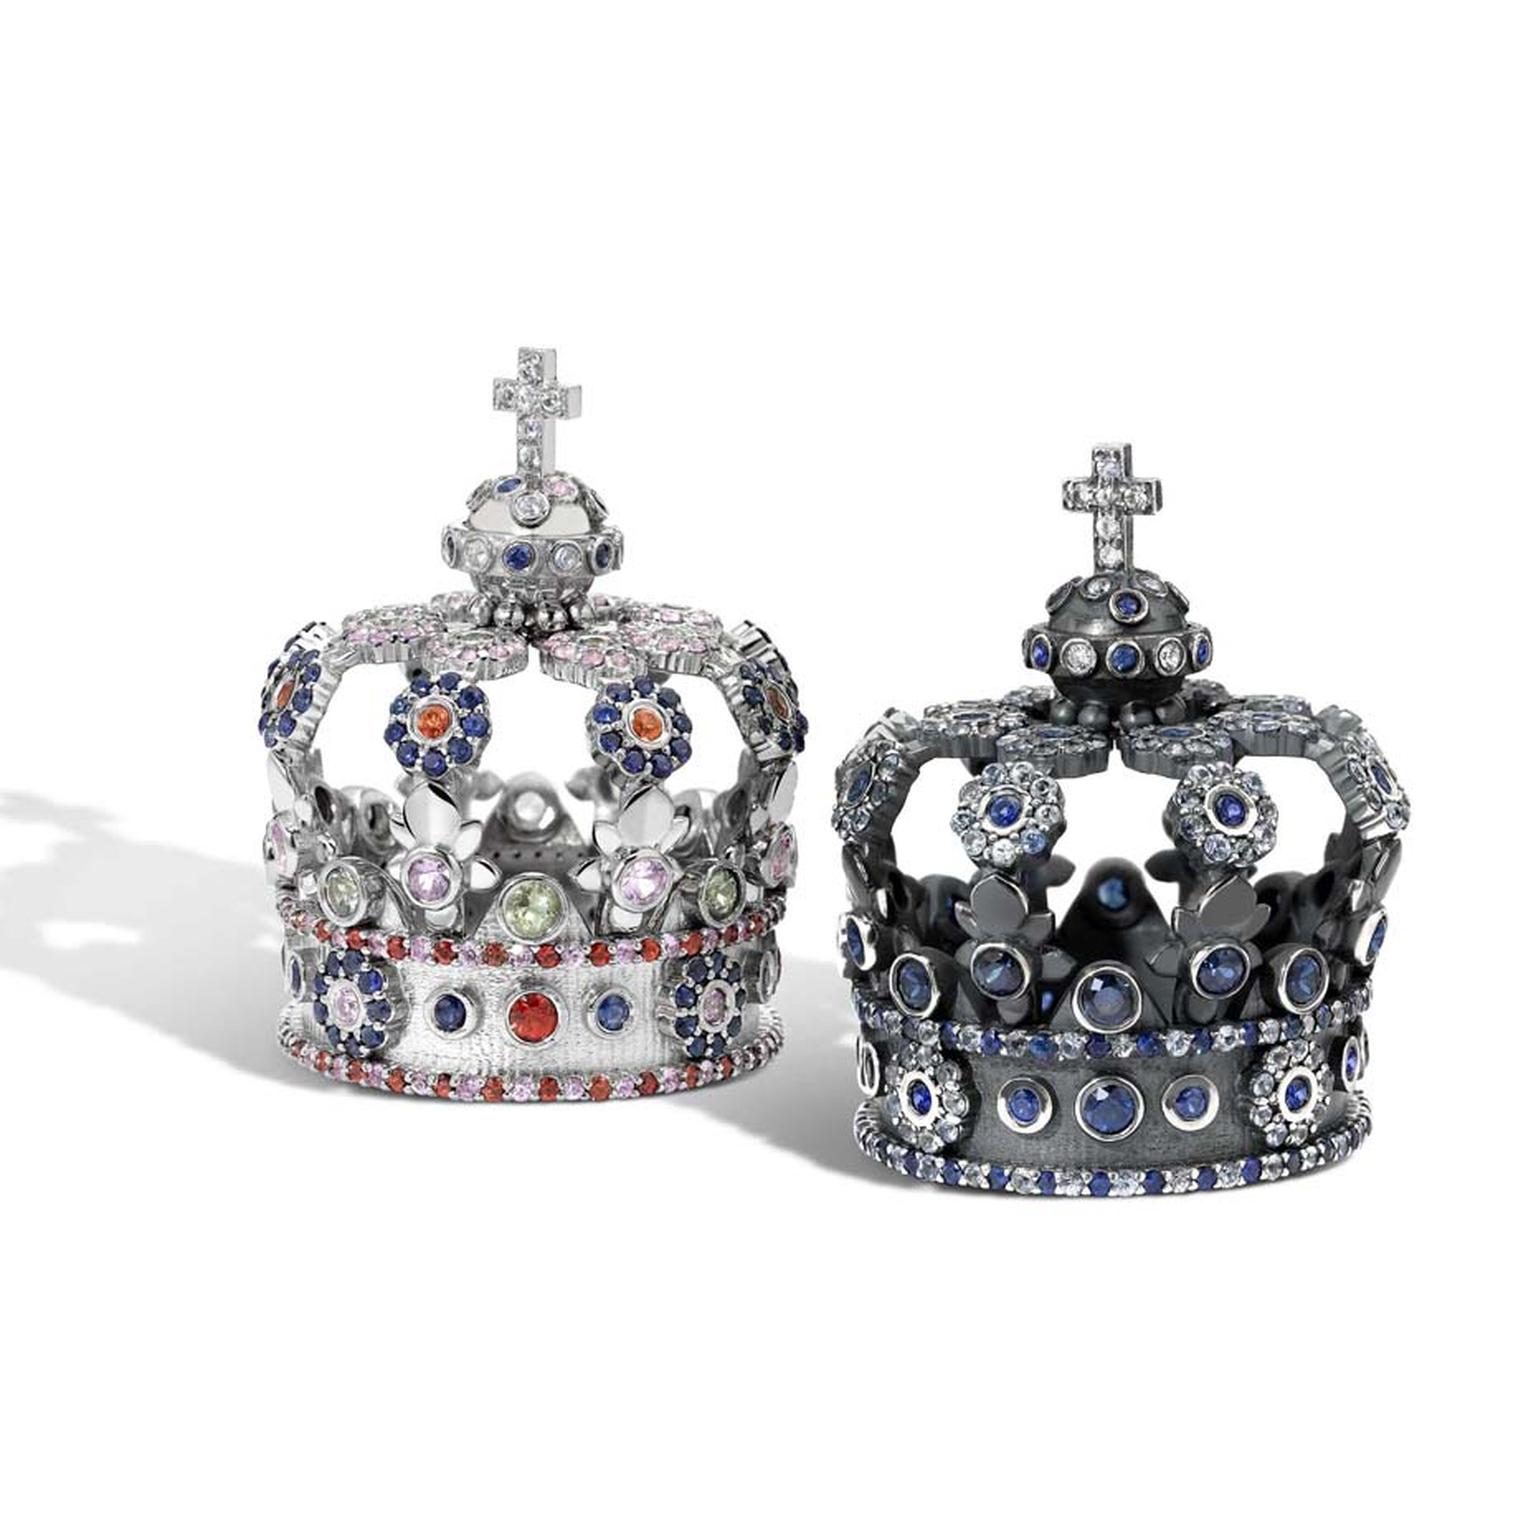 Powder Hill designer and owner Nicola Pulvertaft creates sapphire crowns for White Cube artist Raqib Shaw